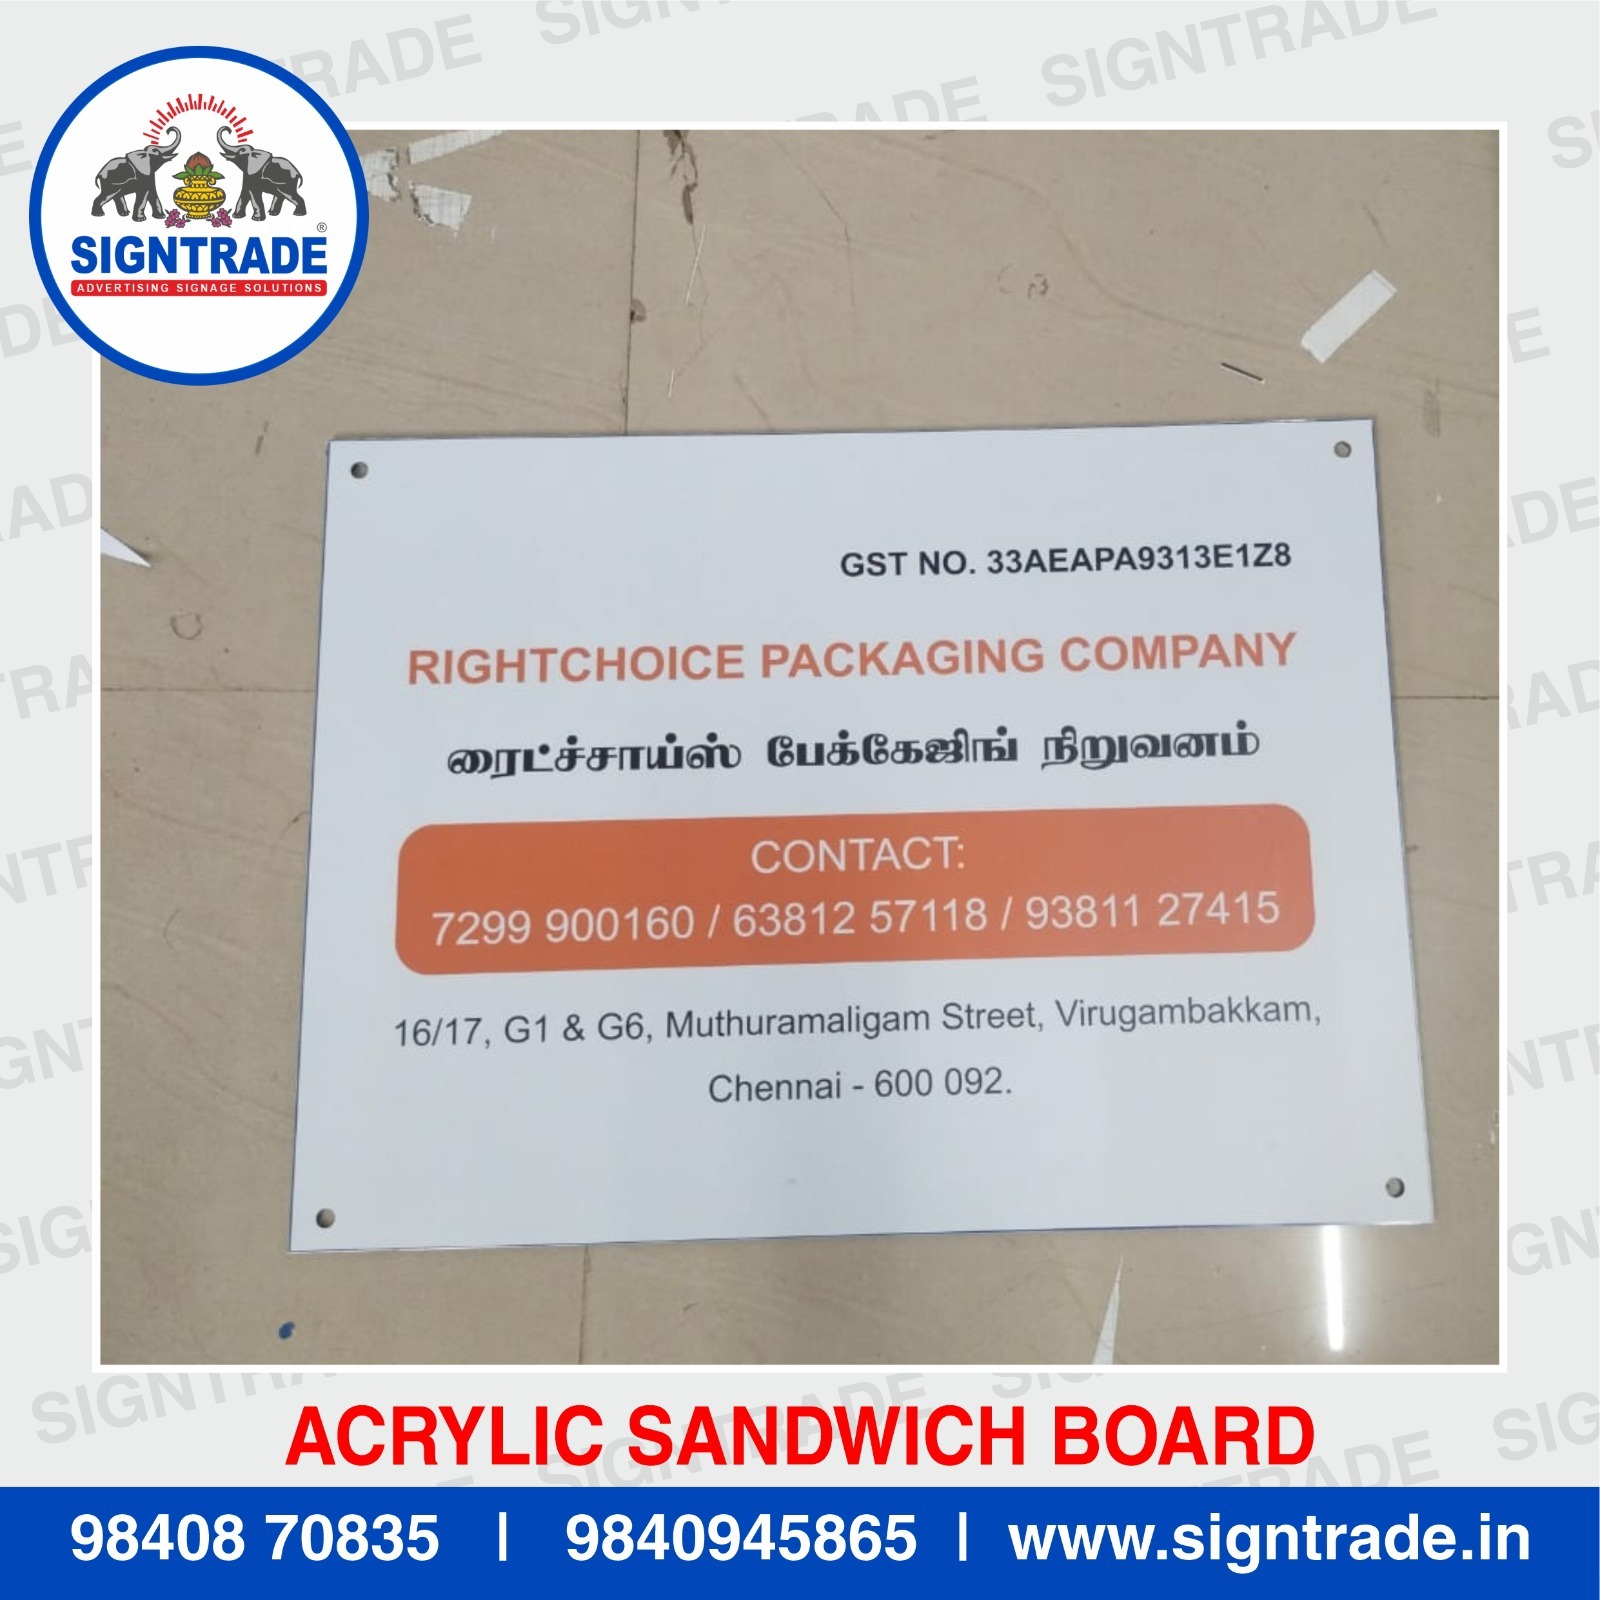 Acrylic Sandwich Board Manufacturers near me